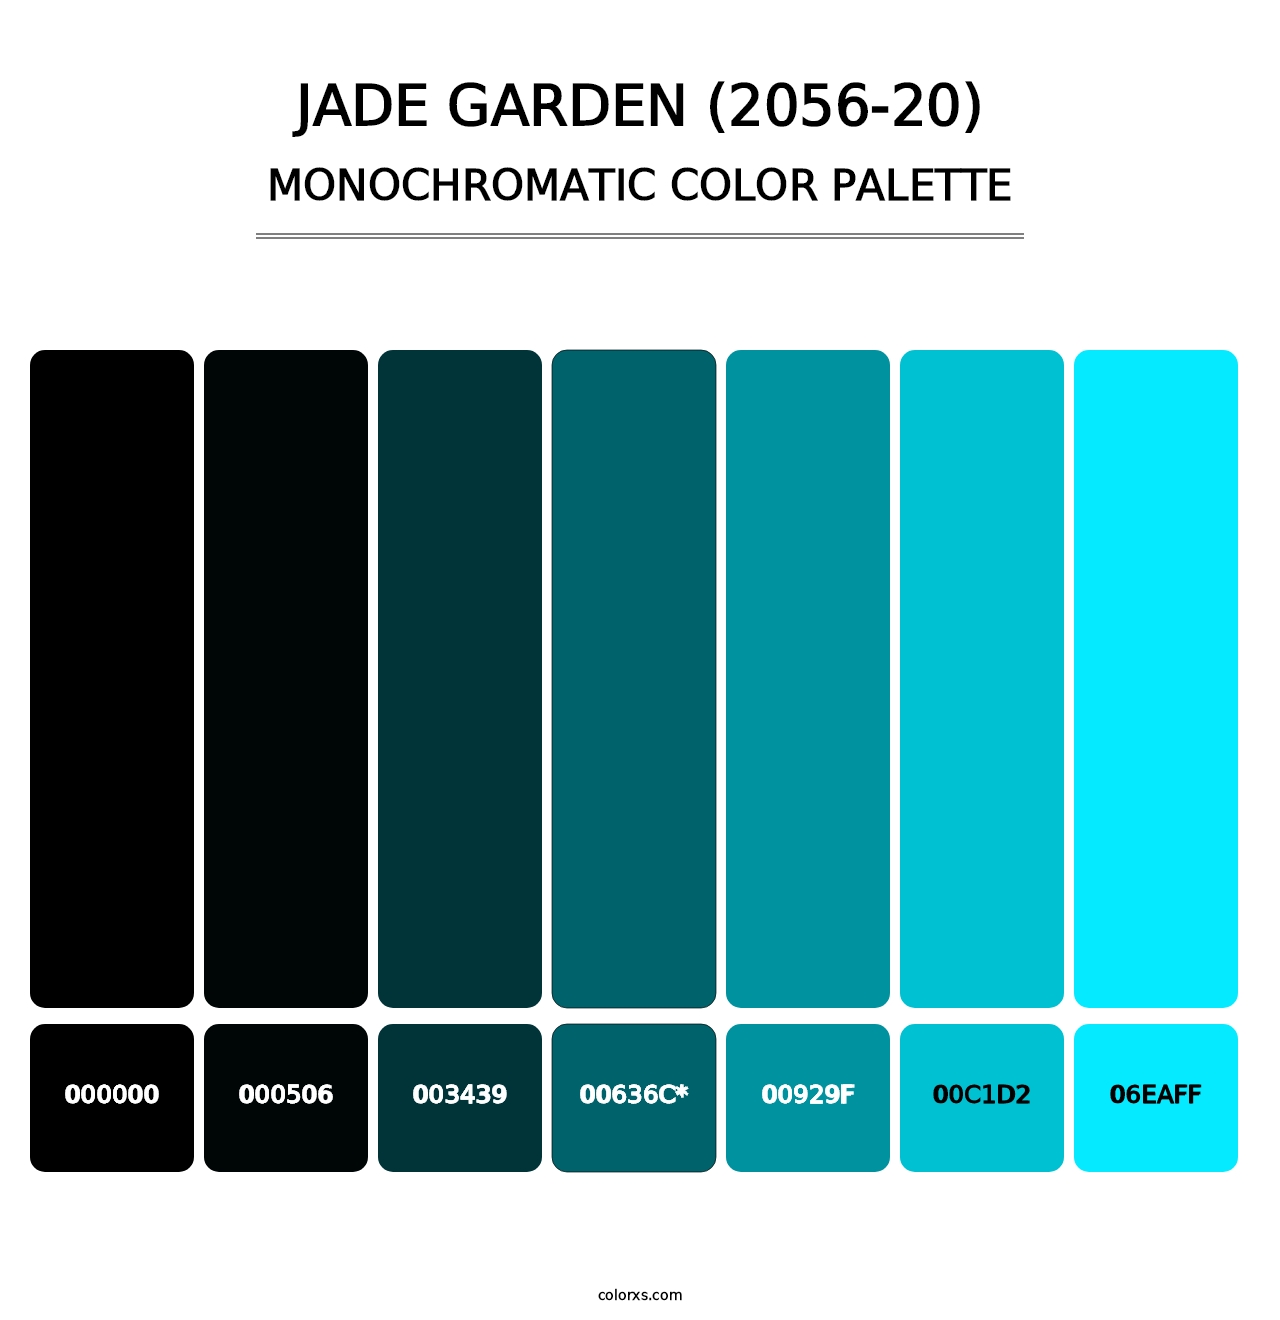 Jade Garden (2056-20) - Monochromatic Color Palette